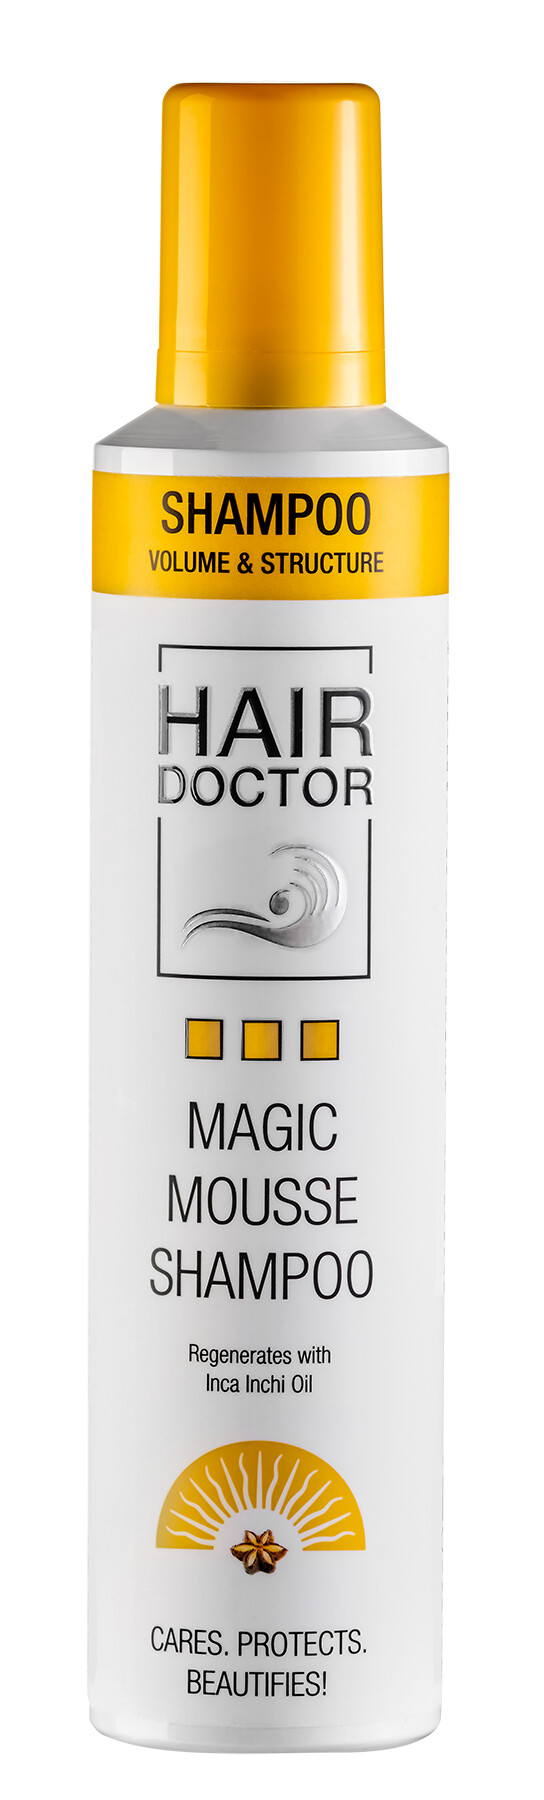 Pflege HAIR DOCTOR Magic Mousse Shampoo 0ml kaufen